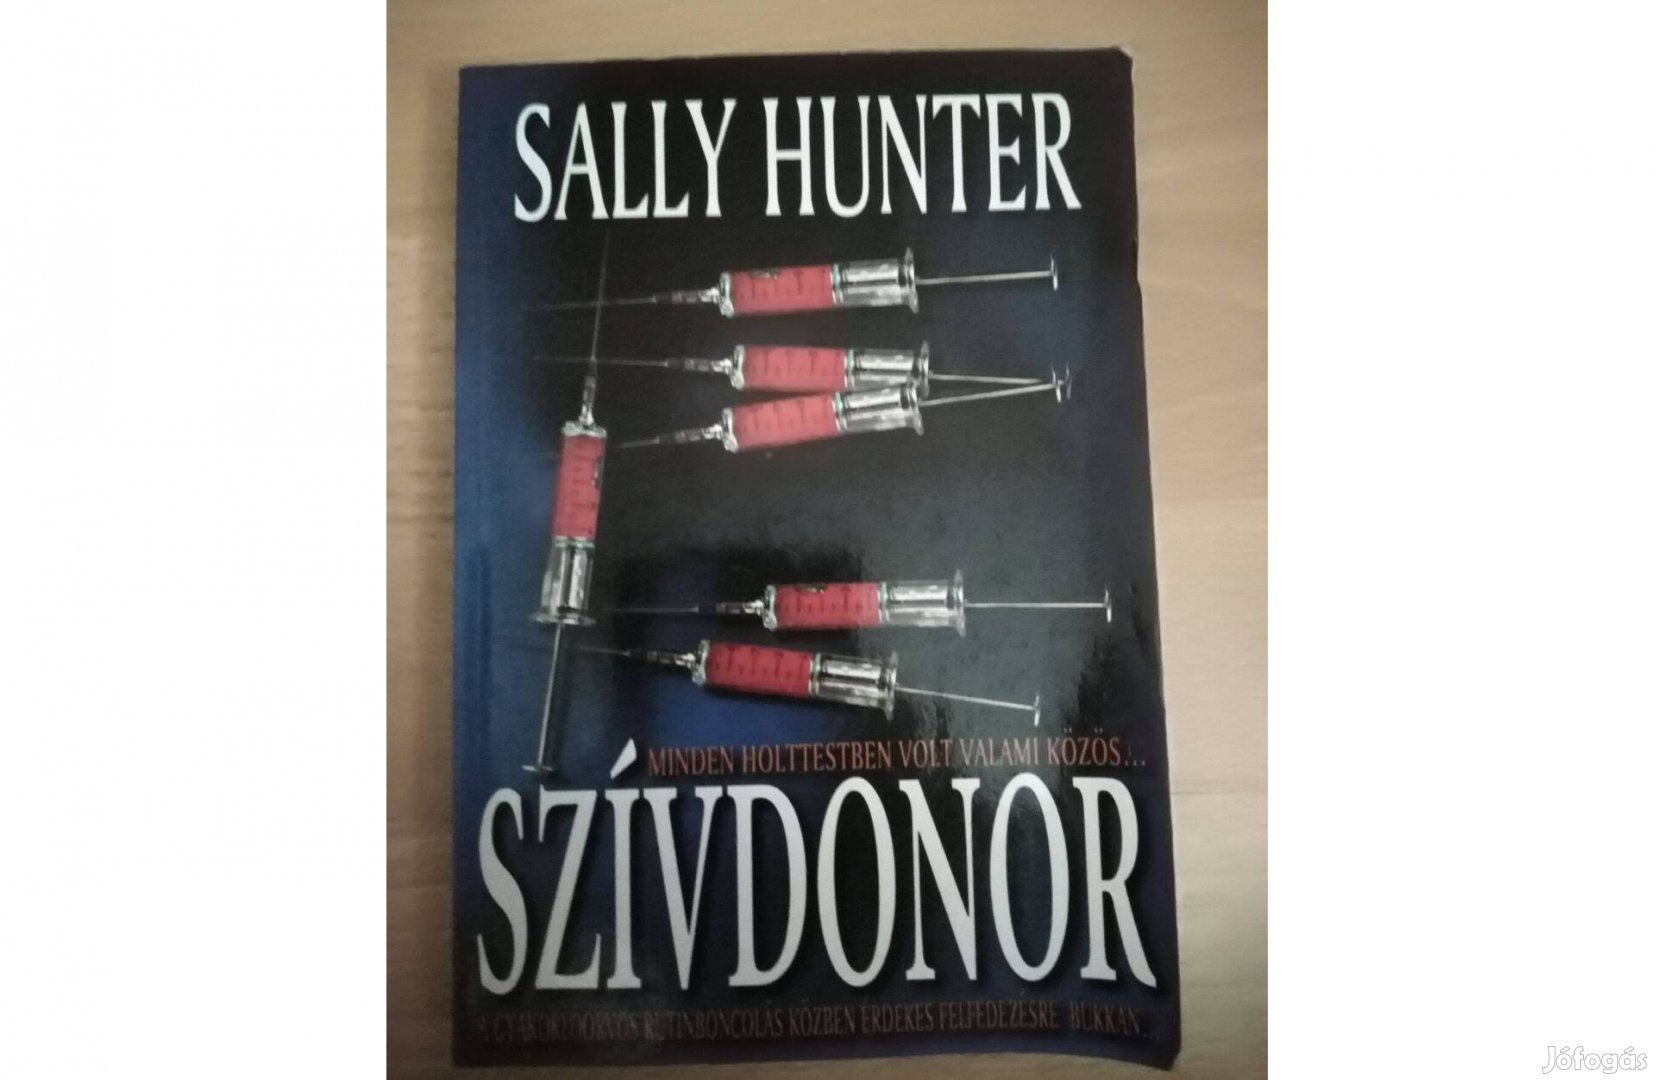 Sally Hunter: Szívdonor